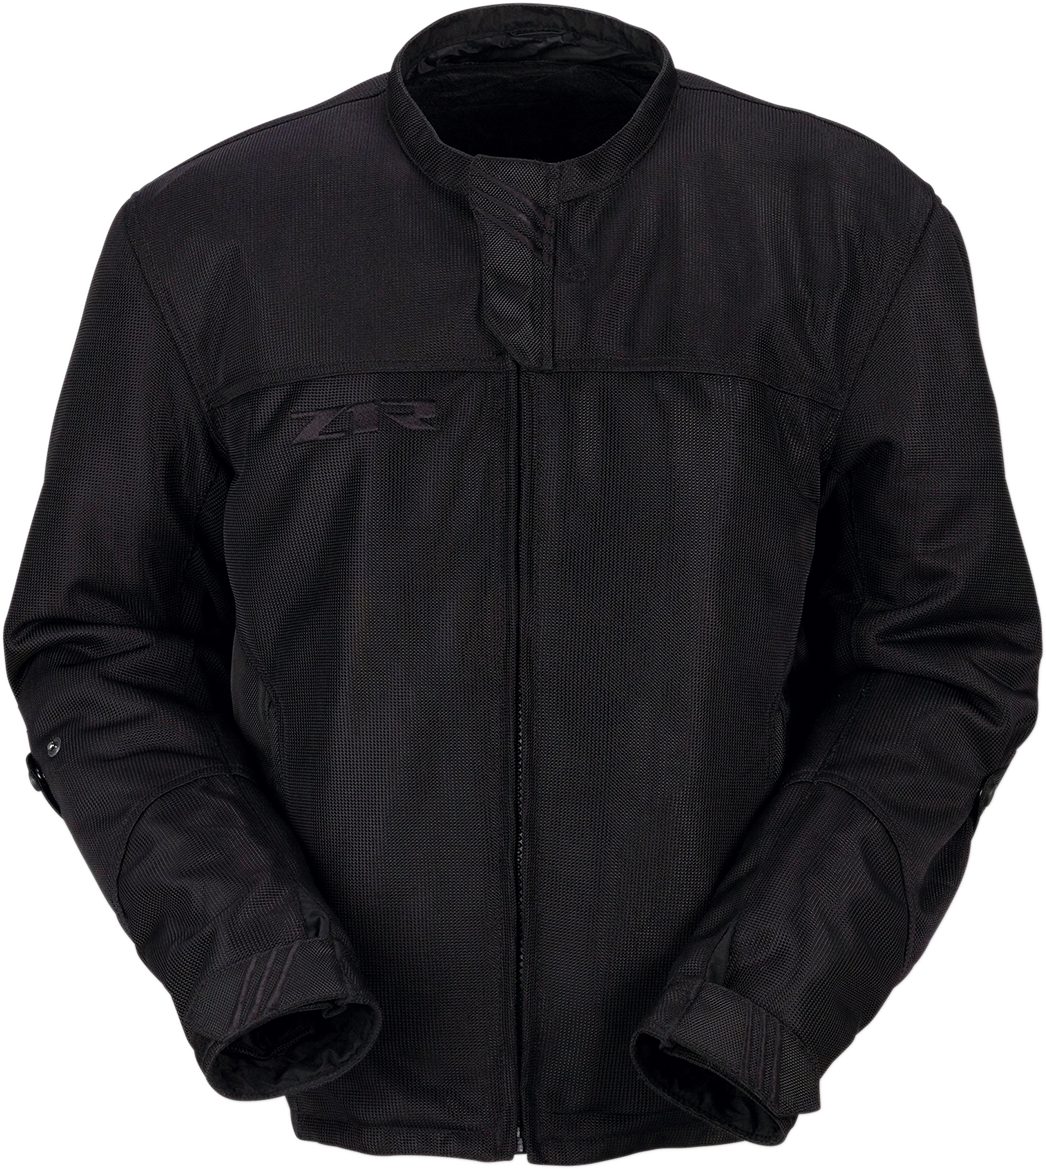 Z1R Gust Mesh Waterproof Jacket - Black - XL 2820-4944